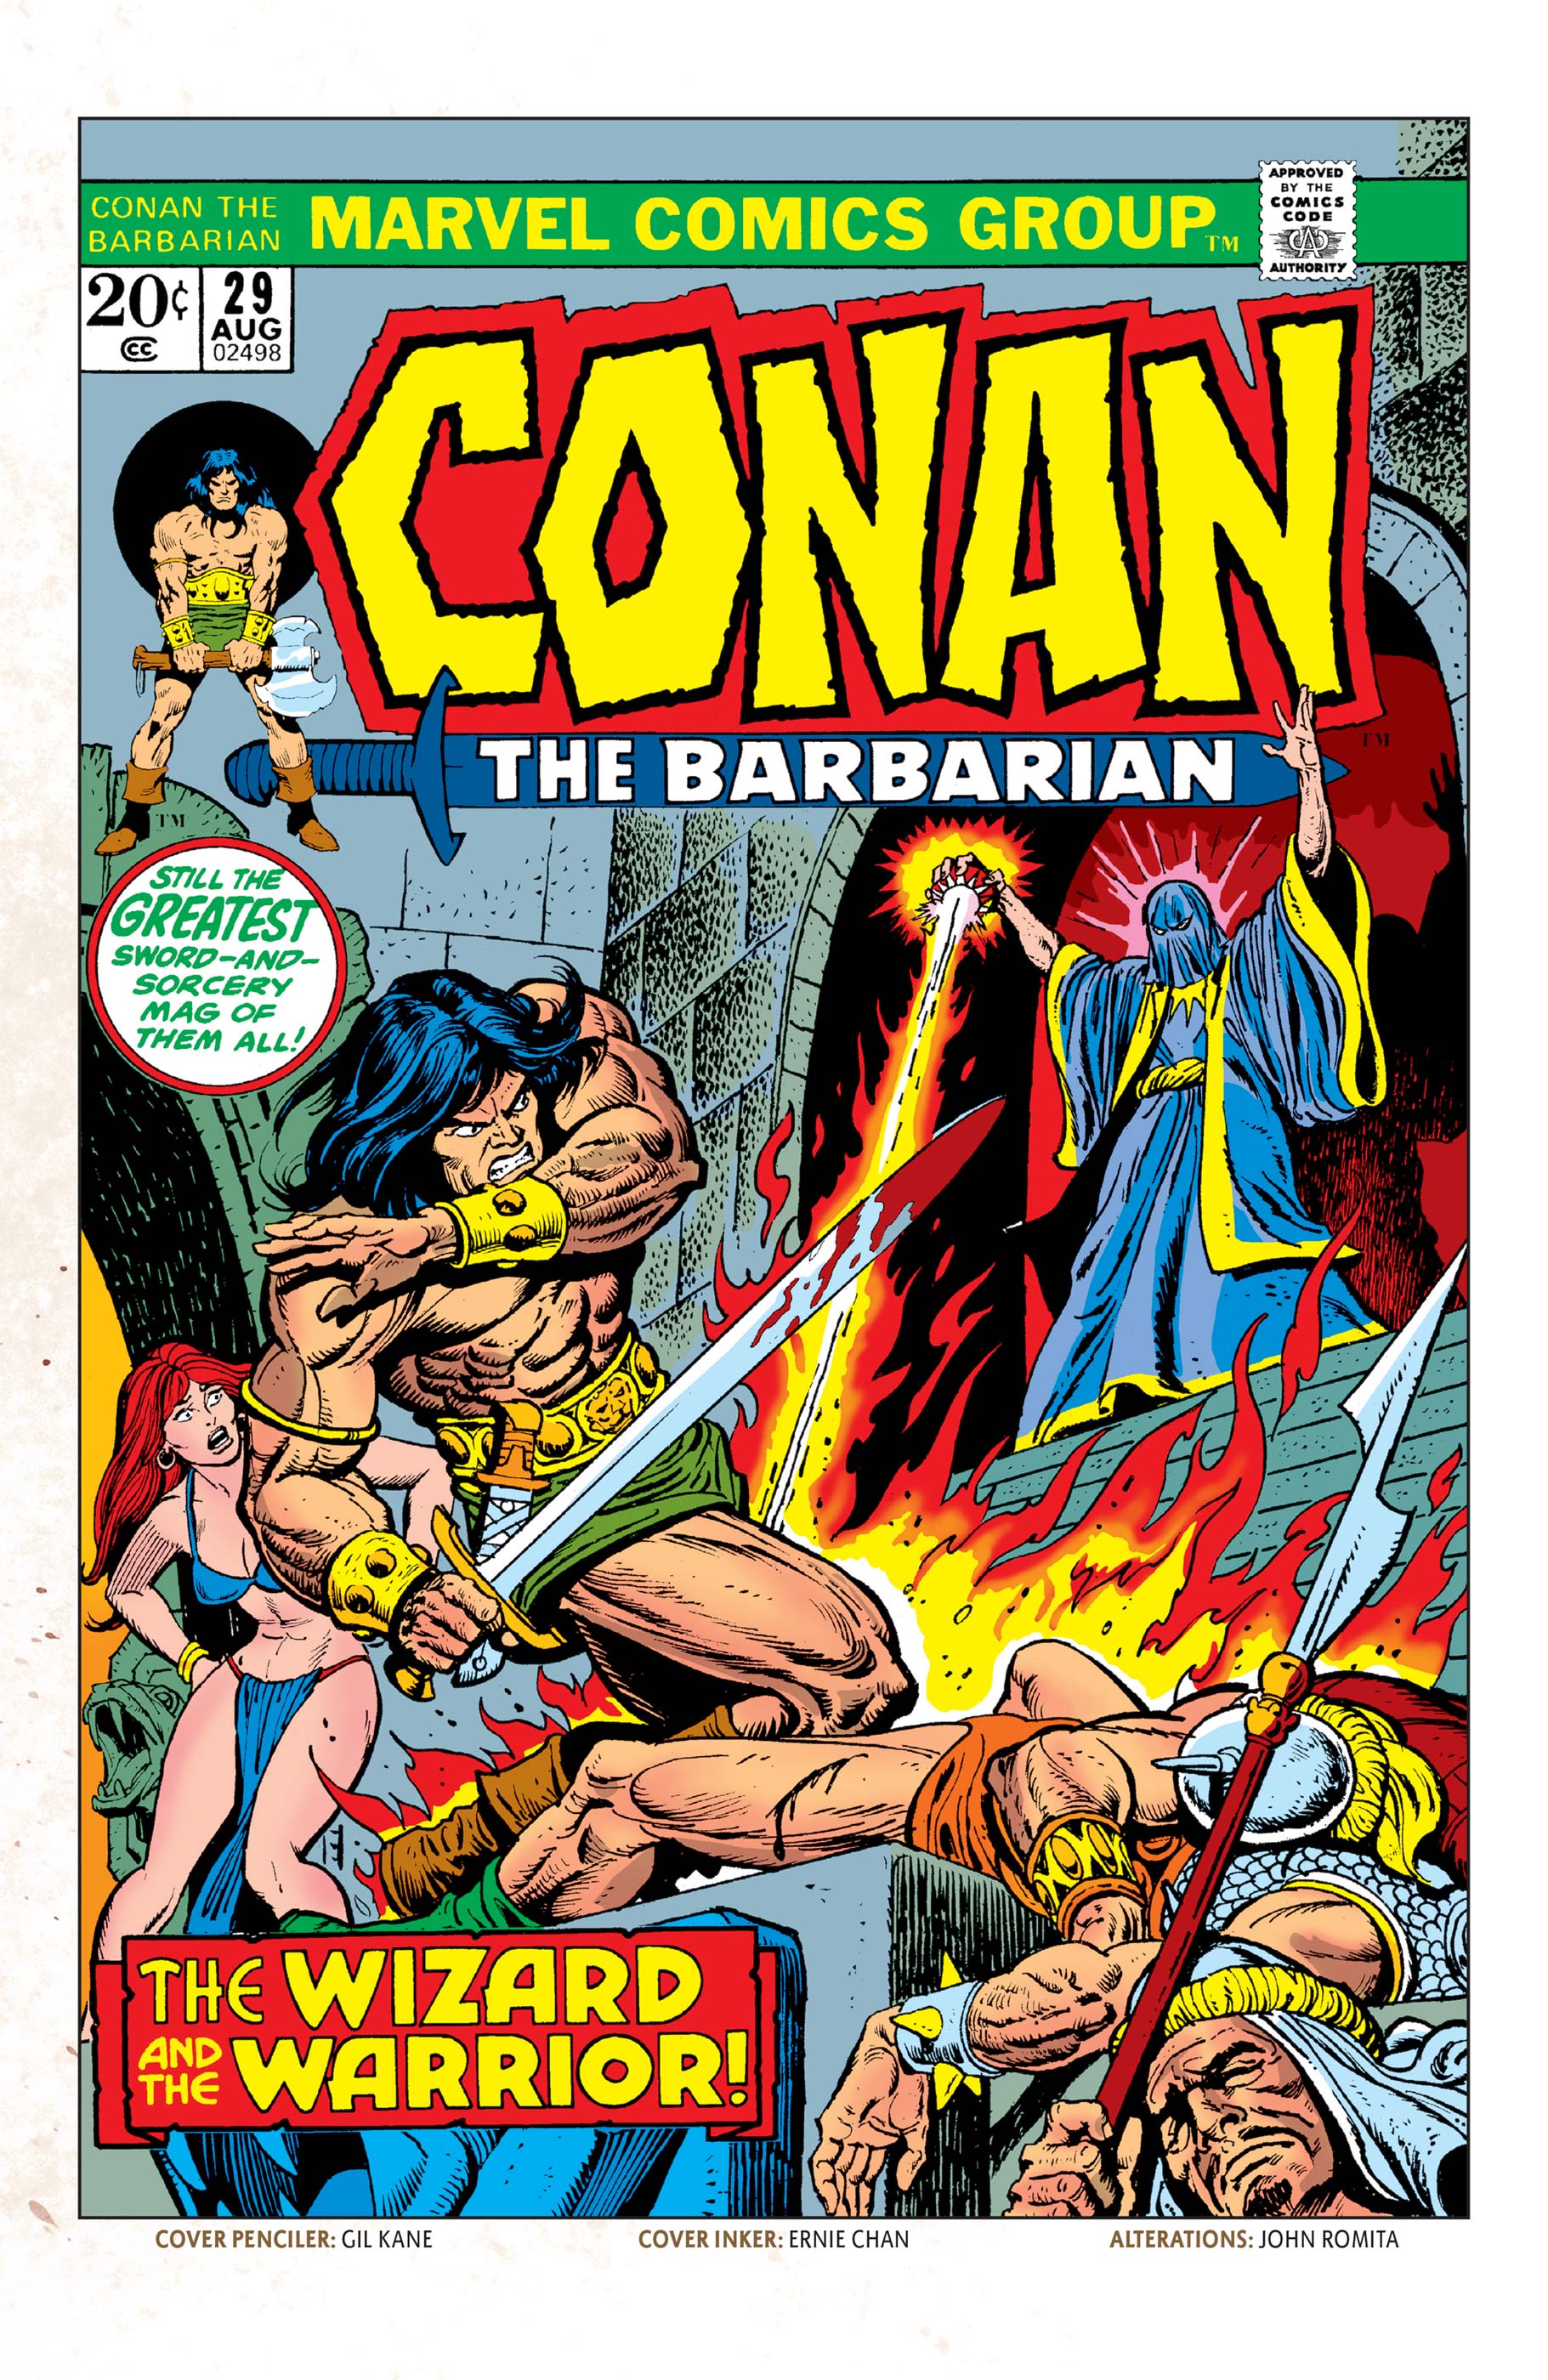 Conan the Barbarian (1970) #29